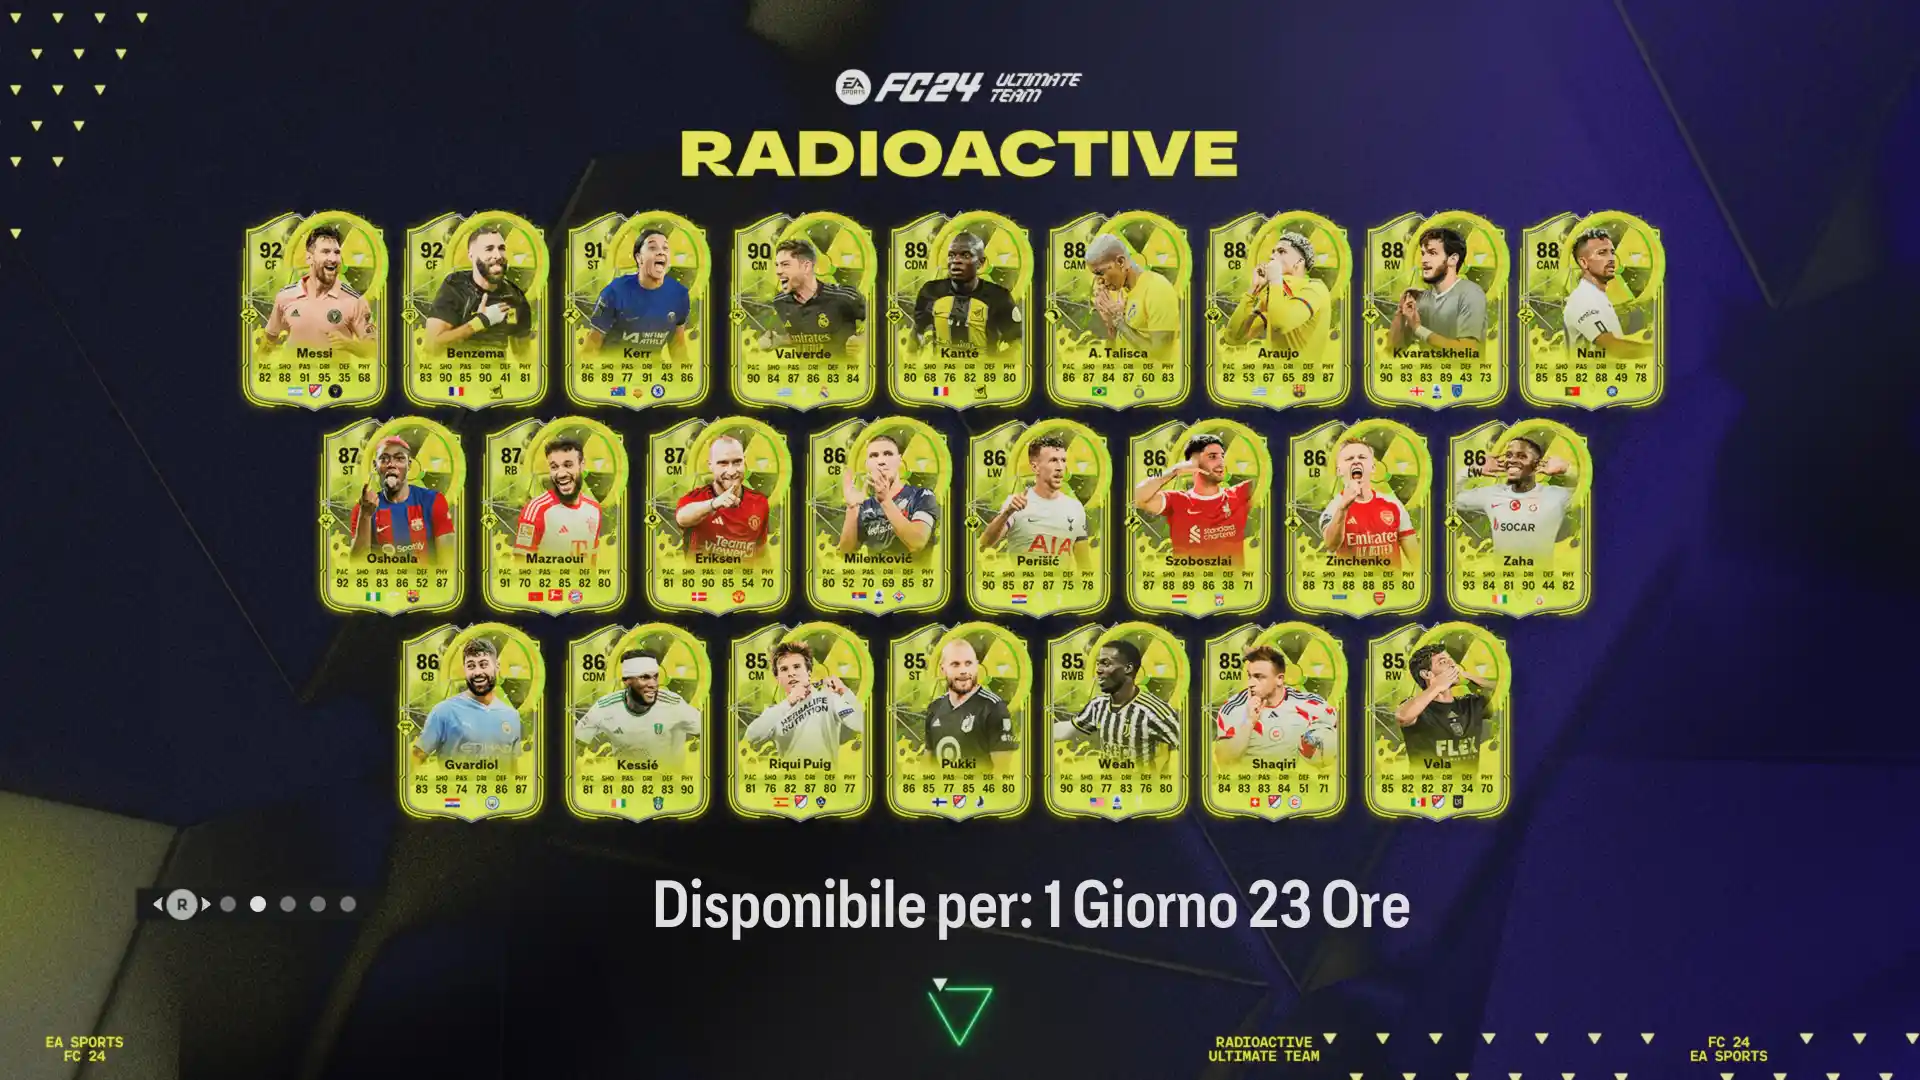 EA FC 24 Ultimate Team Radioactive - Radioattivi: guida evento promo: team 1, SBC e obiettivi